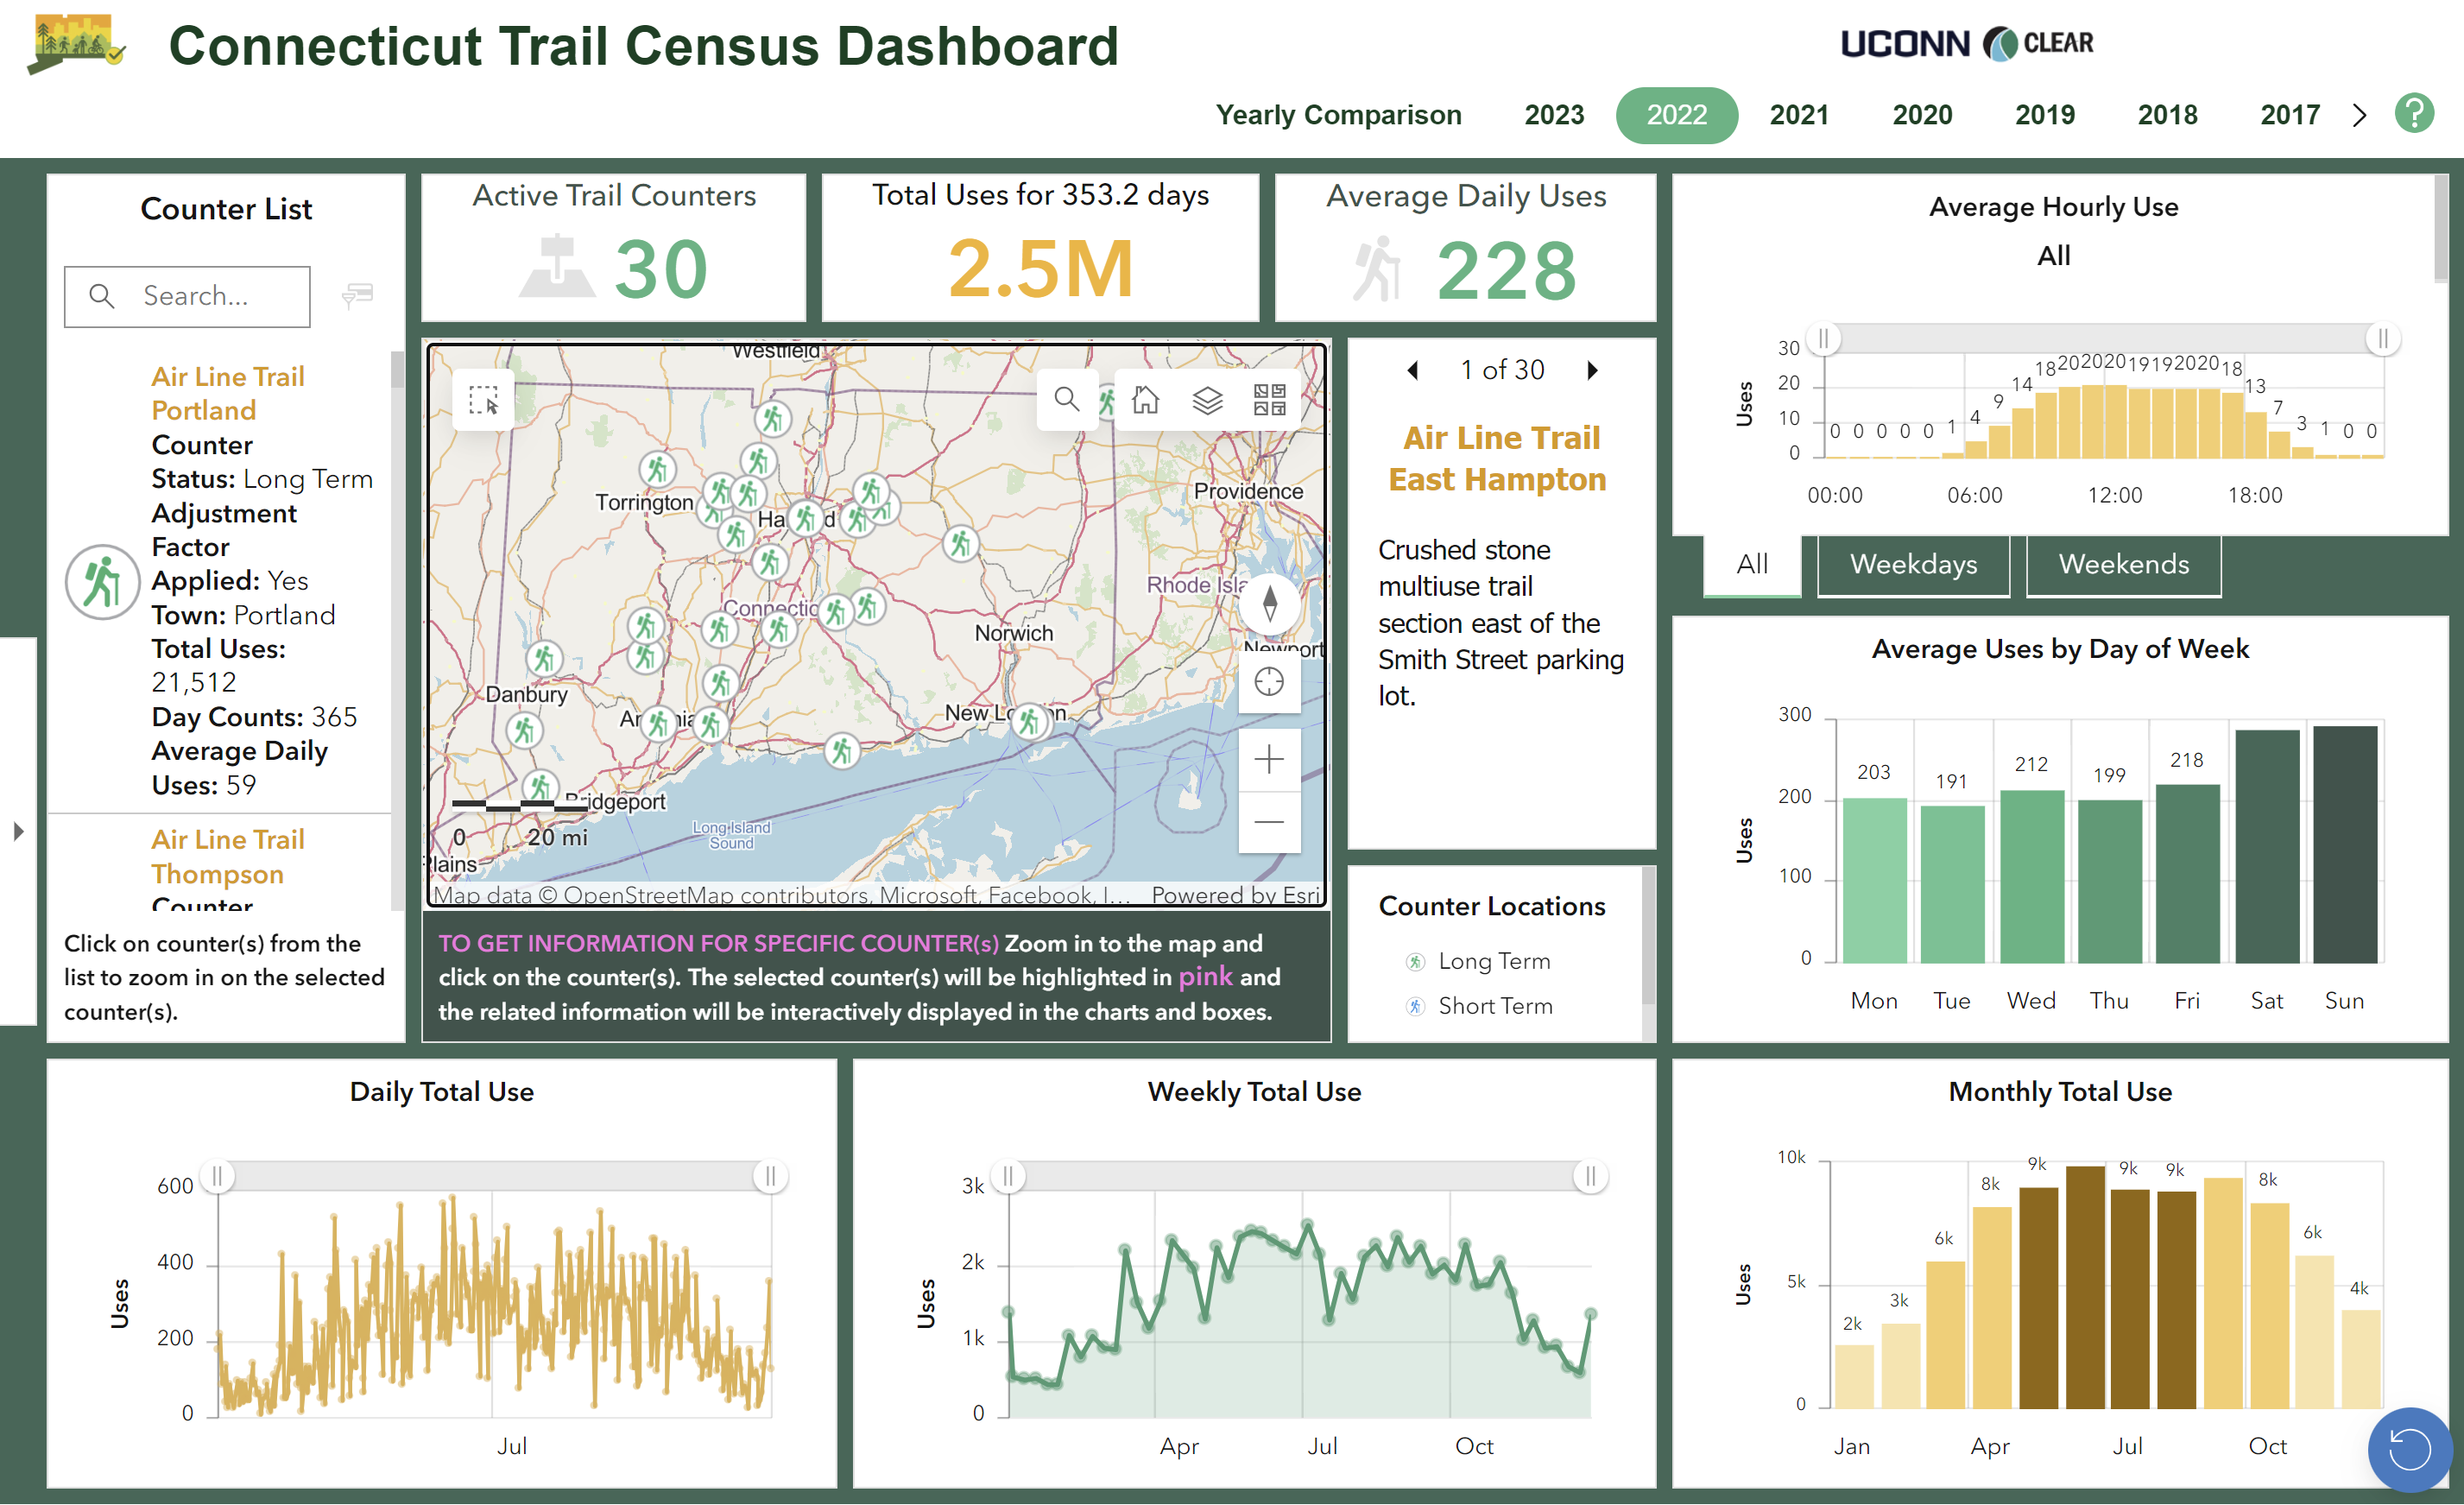 CT Trail Census Dashboard 